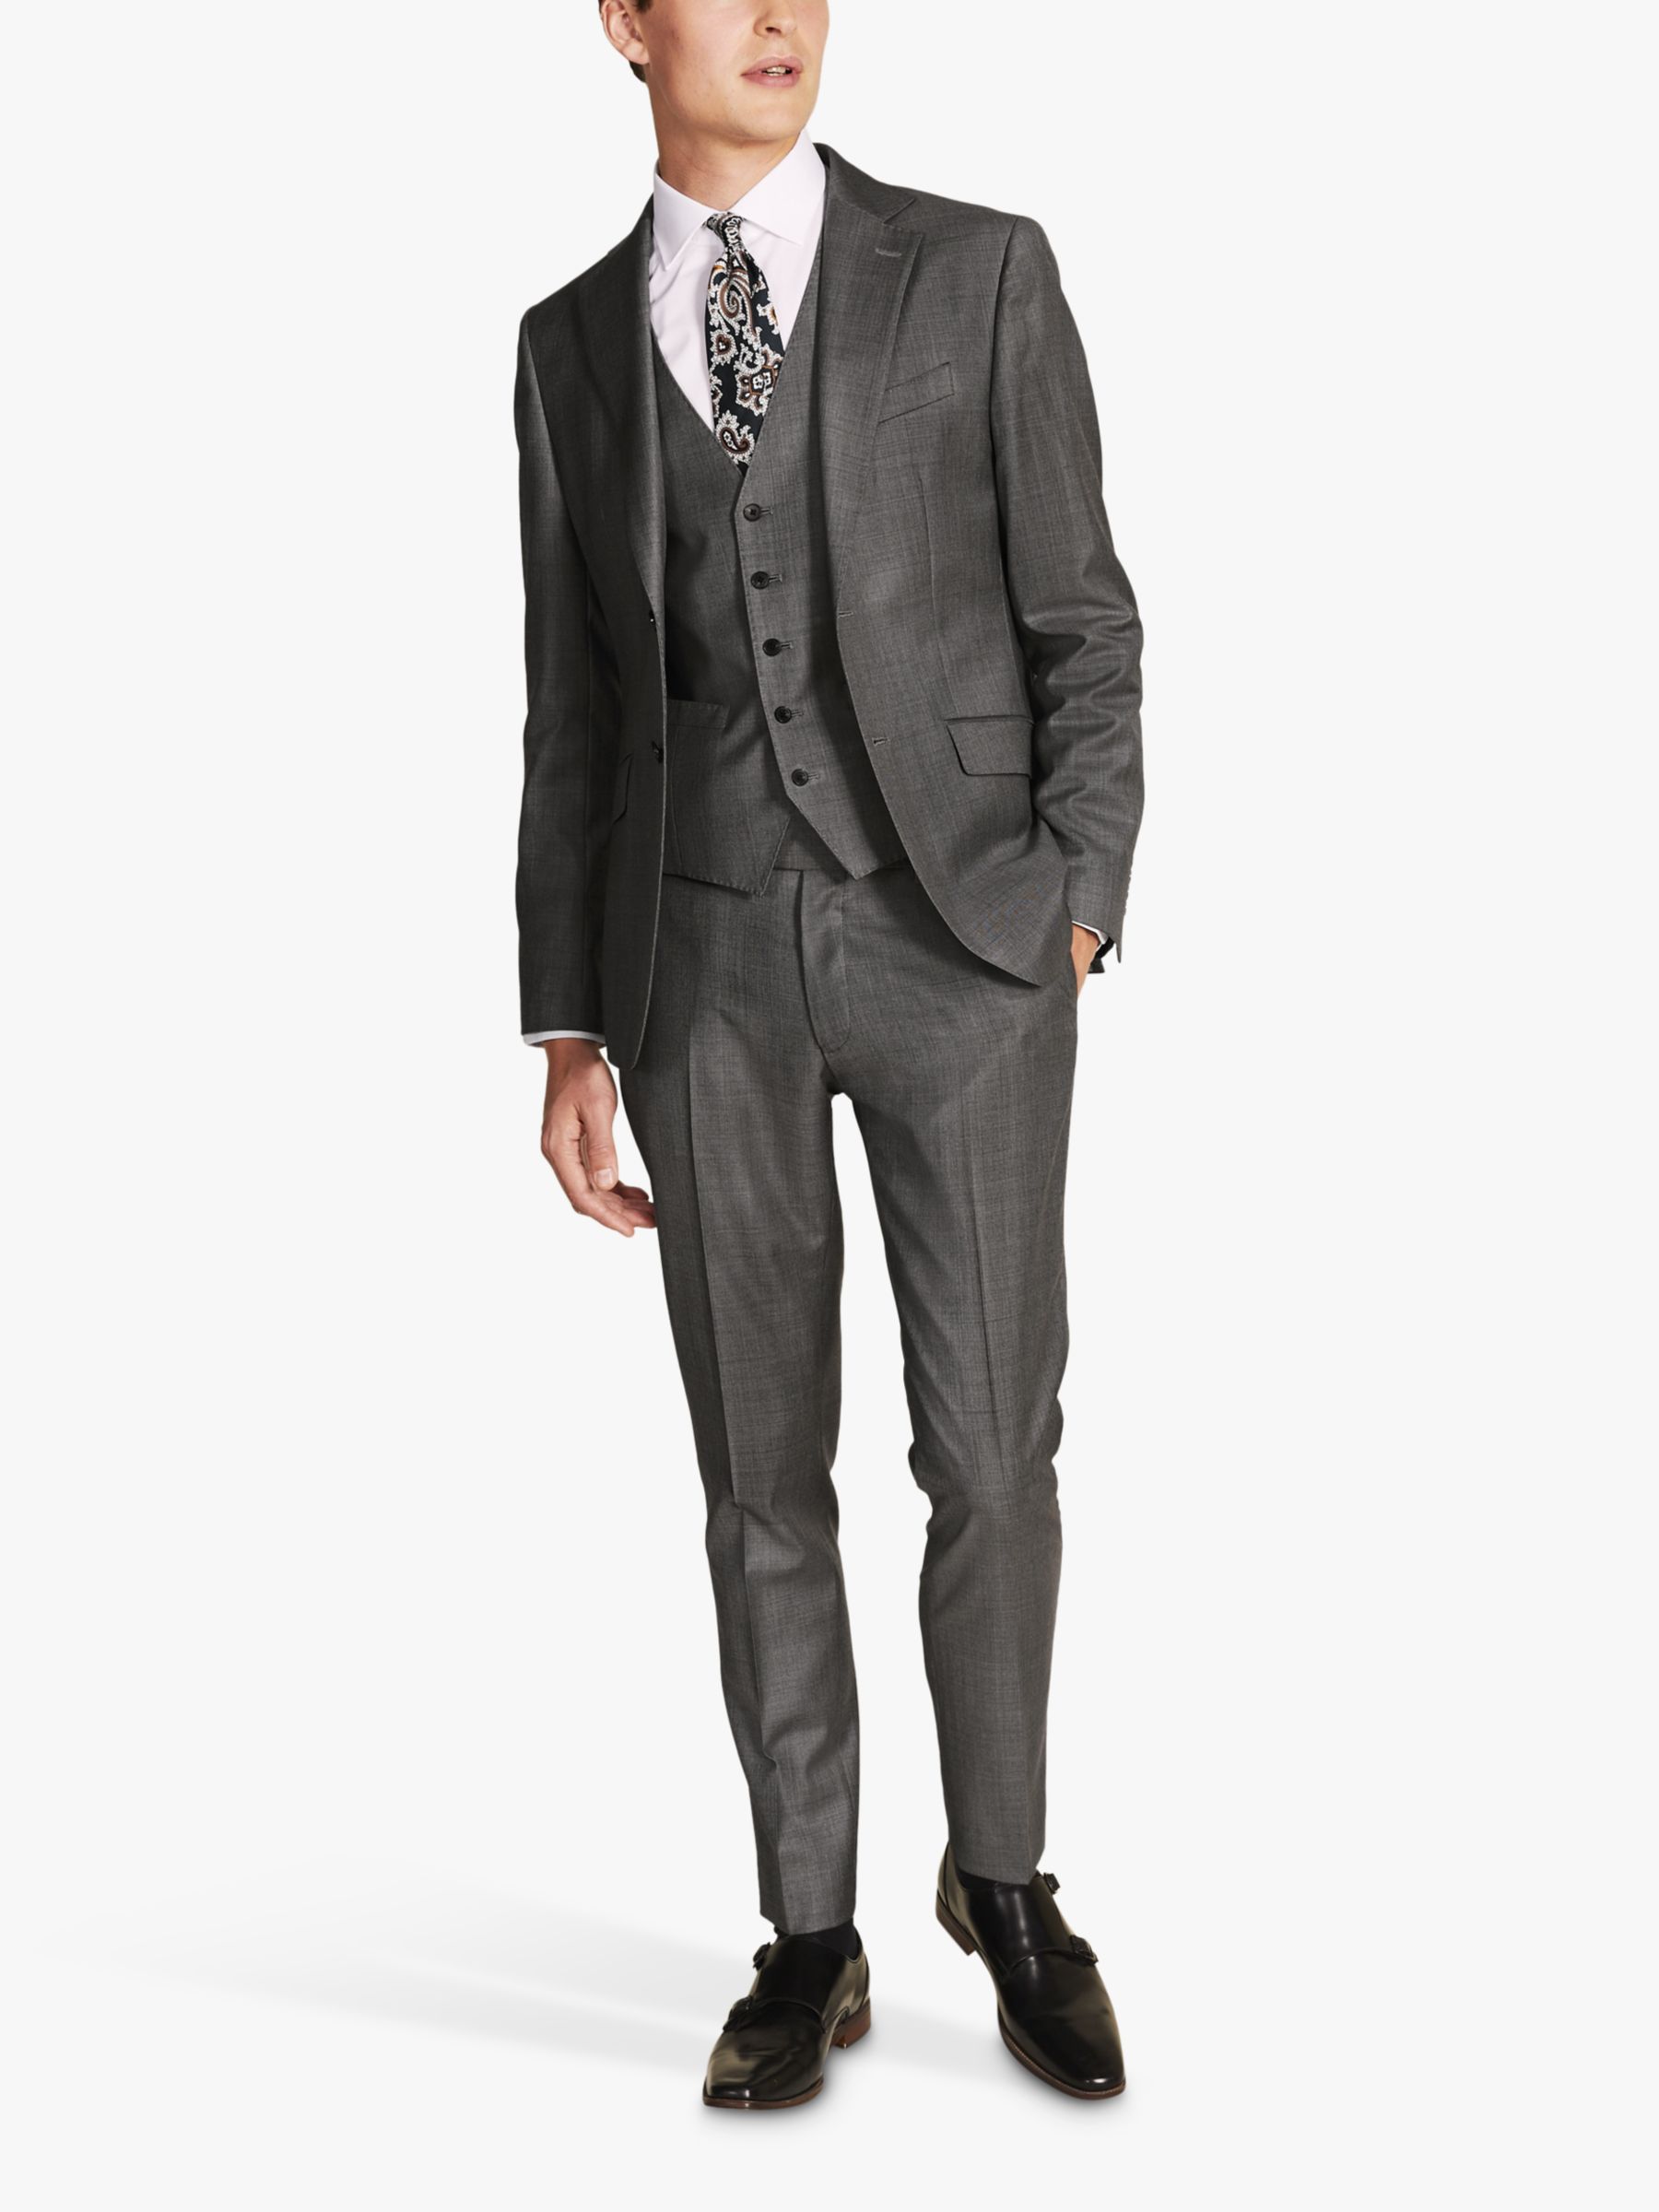 Moss x Reda Slim Fit Sharkskin Suit Jacket, Grey, 36S